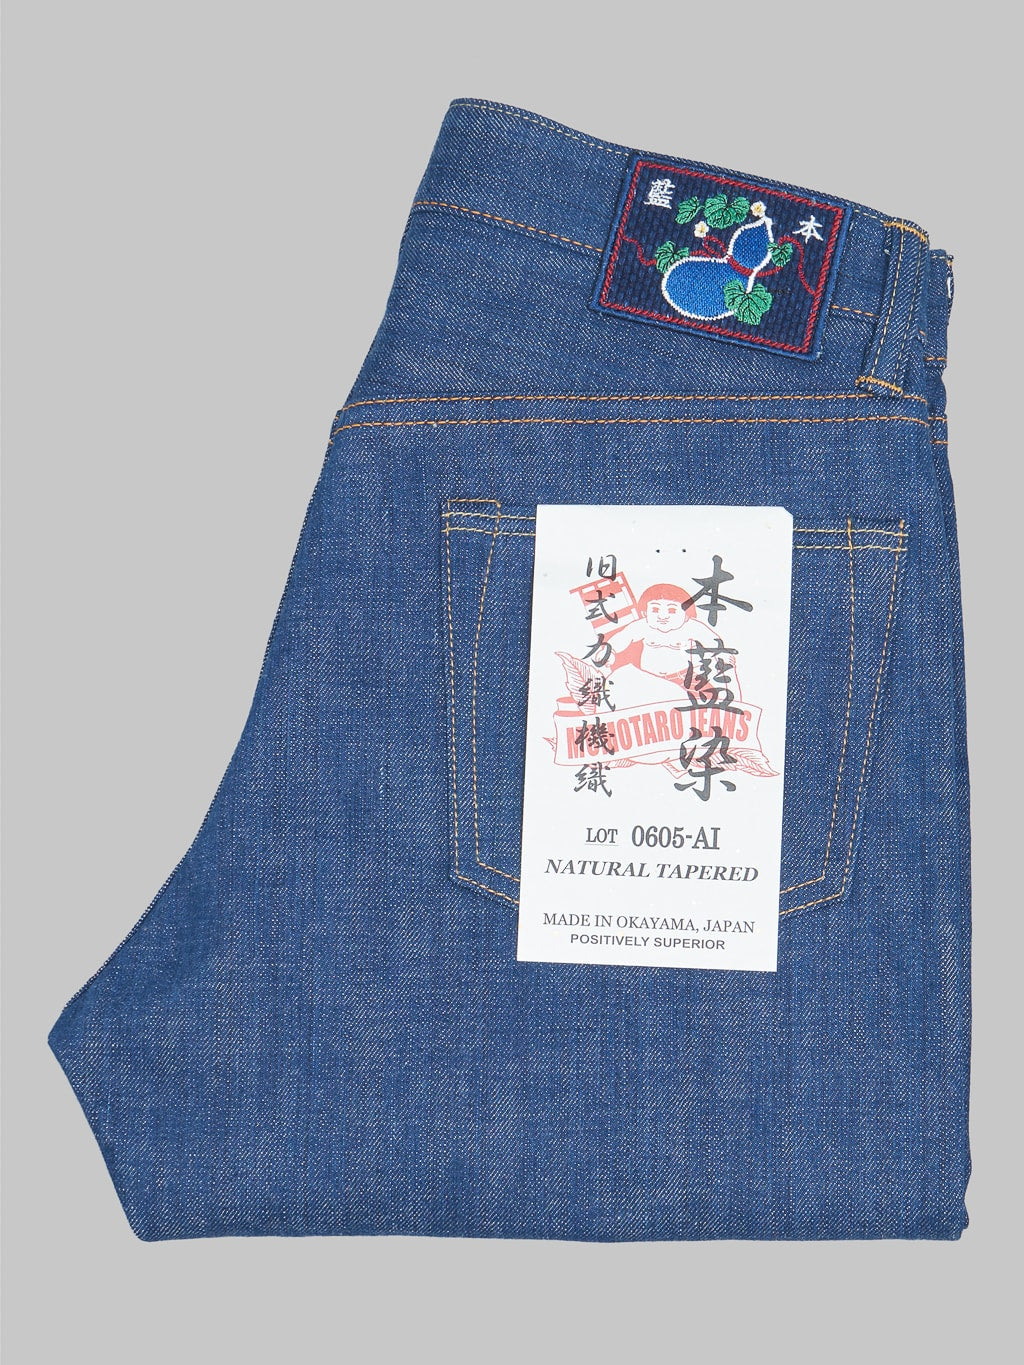 momotaro 0605 ai natural indigo dyed natural tapered denim jeans japanese made